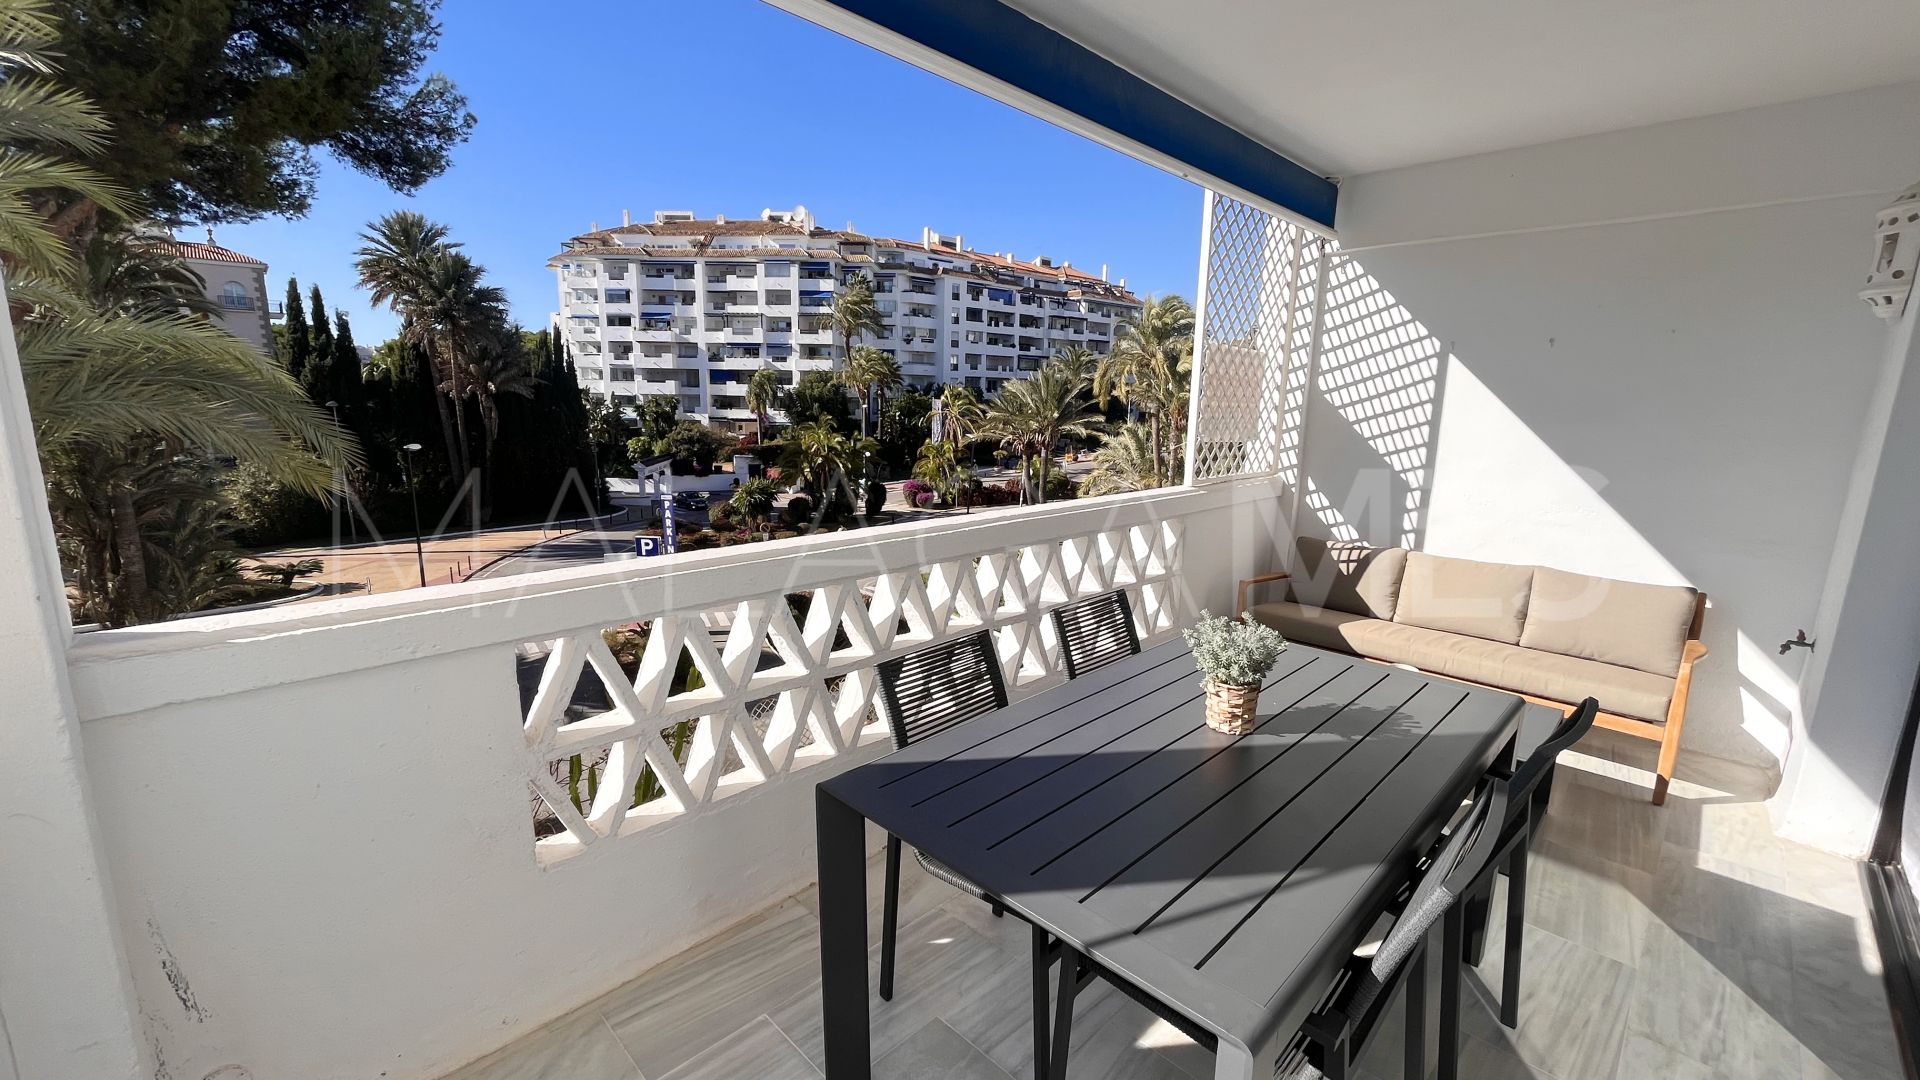 Lägenhet for sale in Playas del Duque